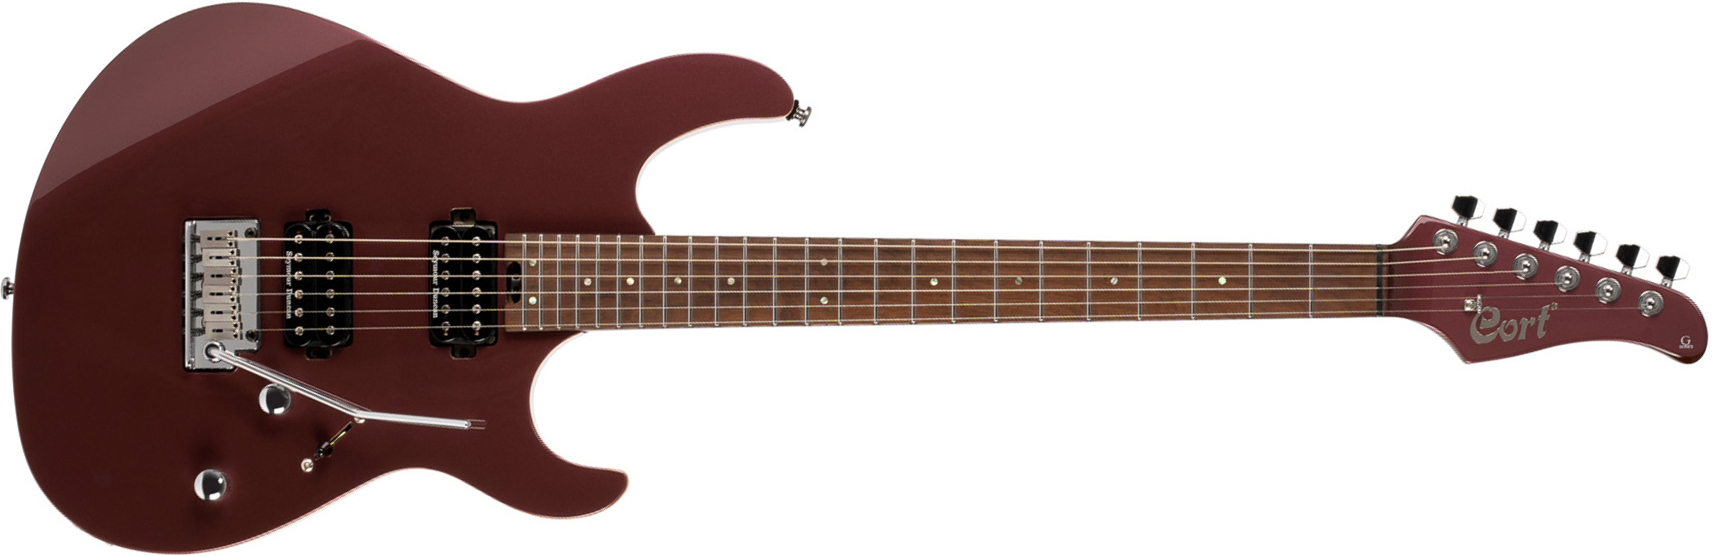 Cort G300 Pro Hh Trem Mn - Vivid Burgundy - Str shape electric guitar - Main picture